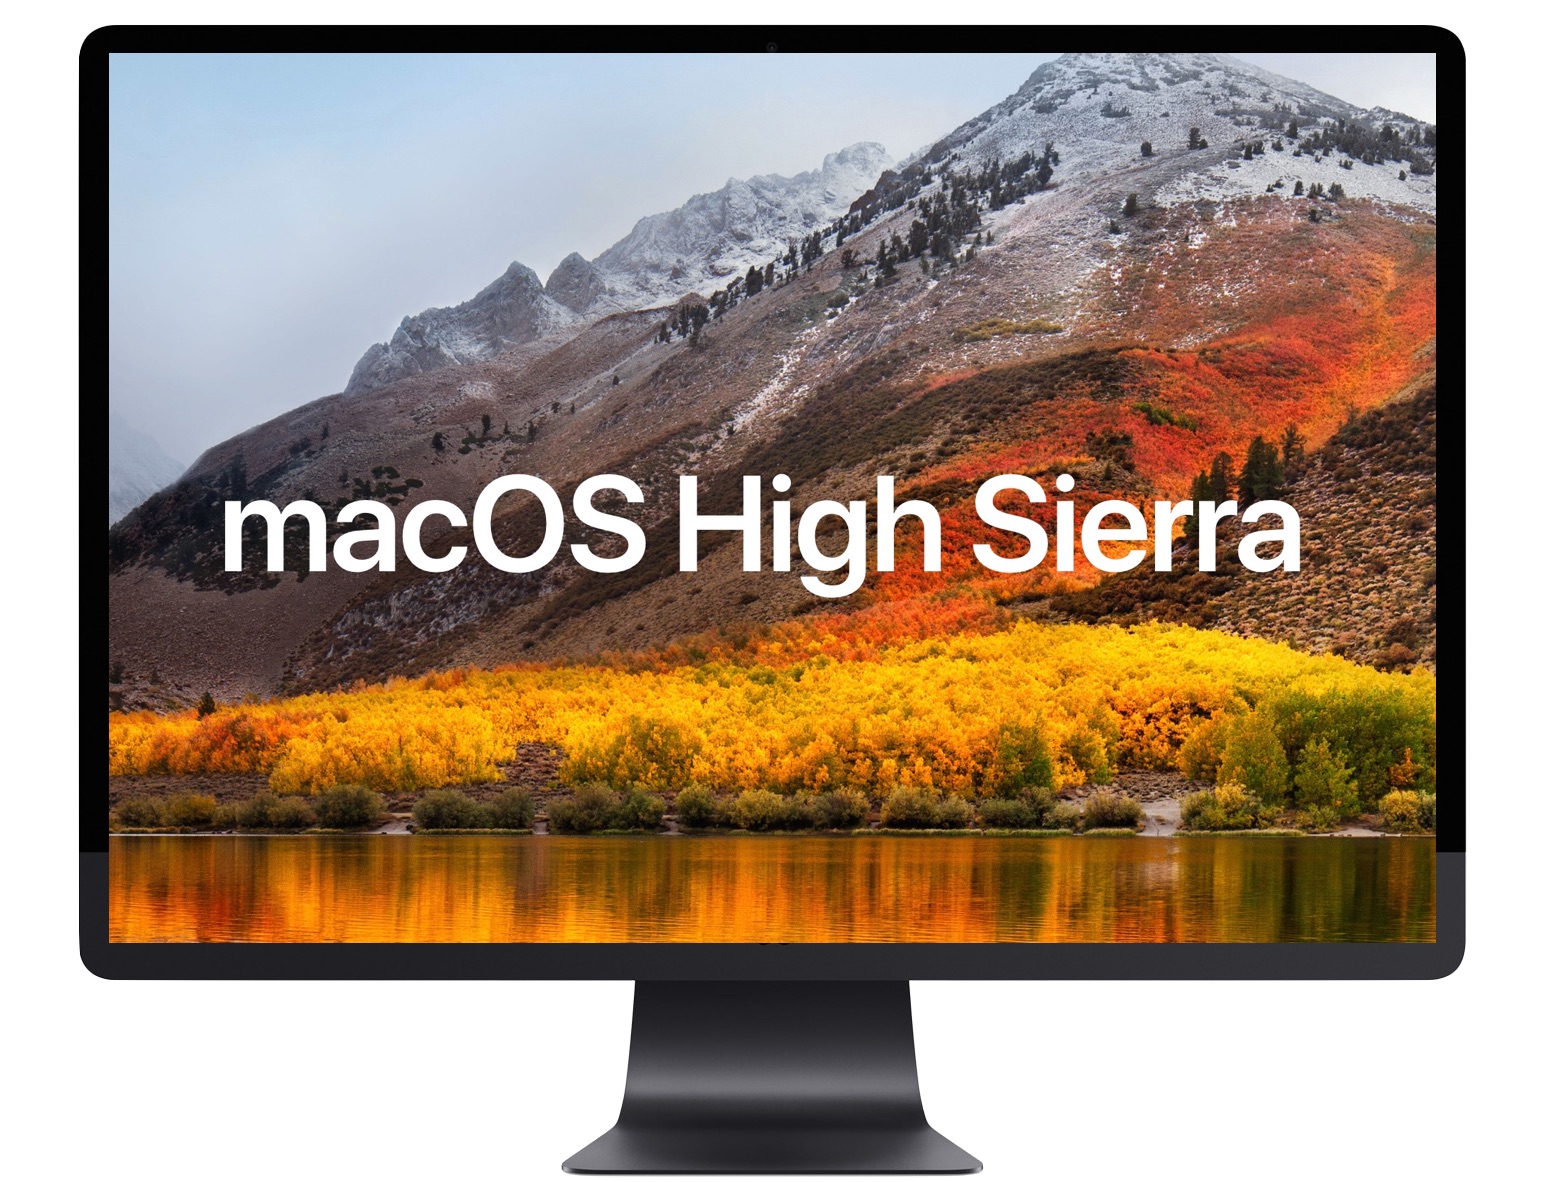 Hi os 13. Mac os x 13. Mac os Sierra 10.13. High Sierra 10.13.6. Мак os High Sierra.